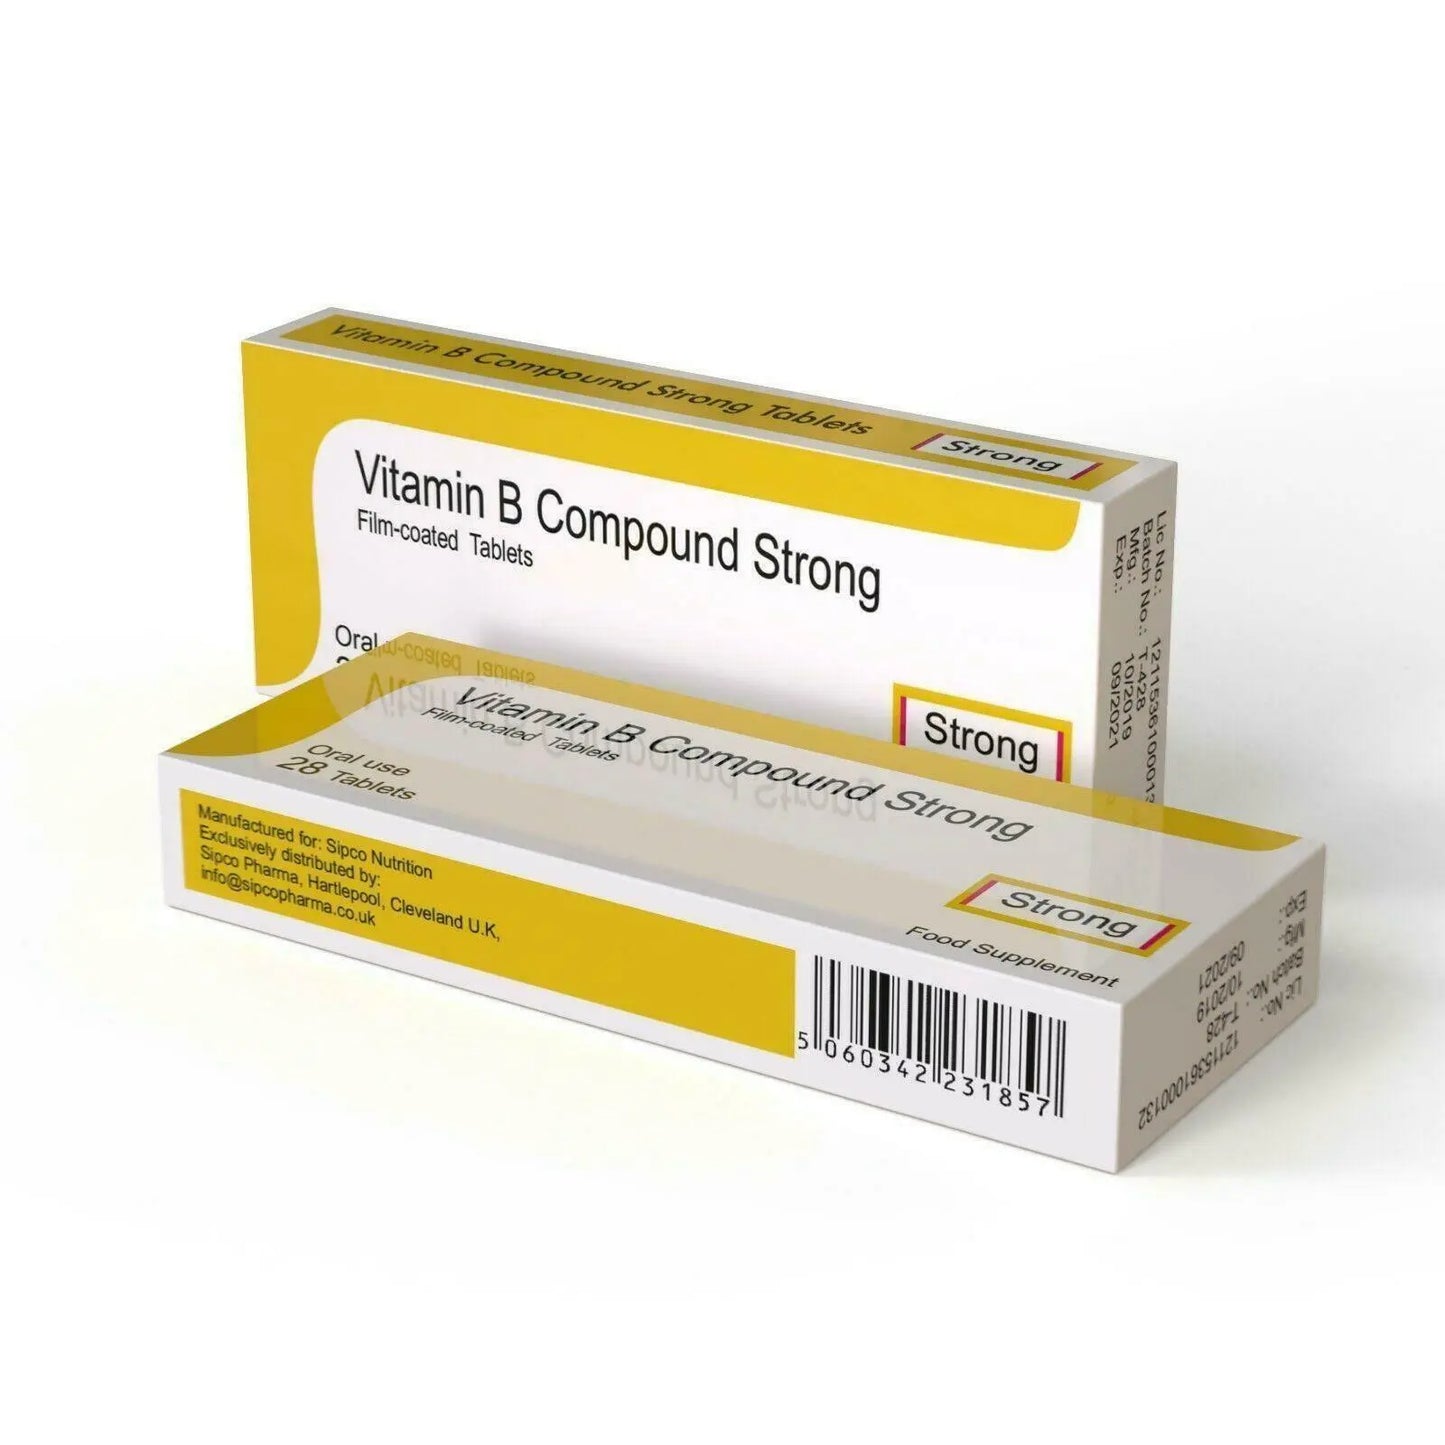 Vitamin B Compound Strong 28 tablets pack vitamin B1,B2,B6,B12 - Arc Health Nutrition UK Ltd 